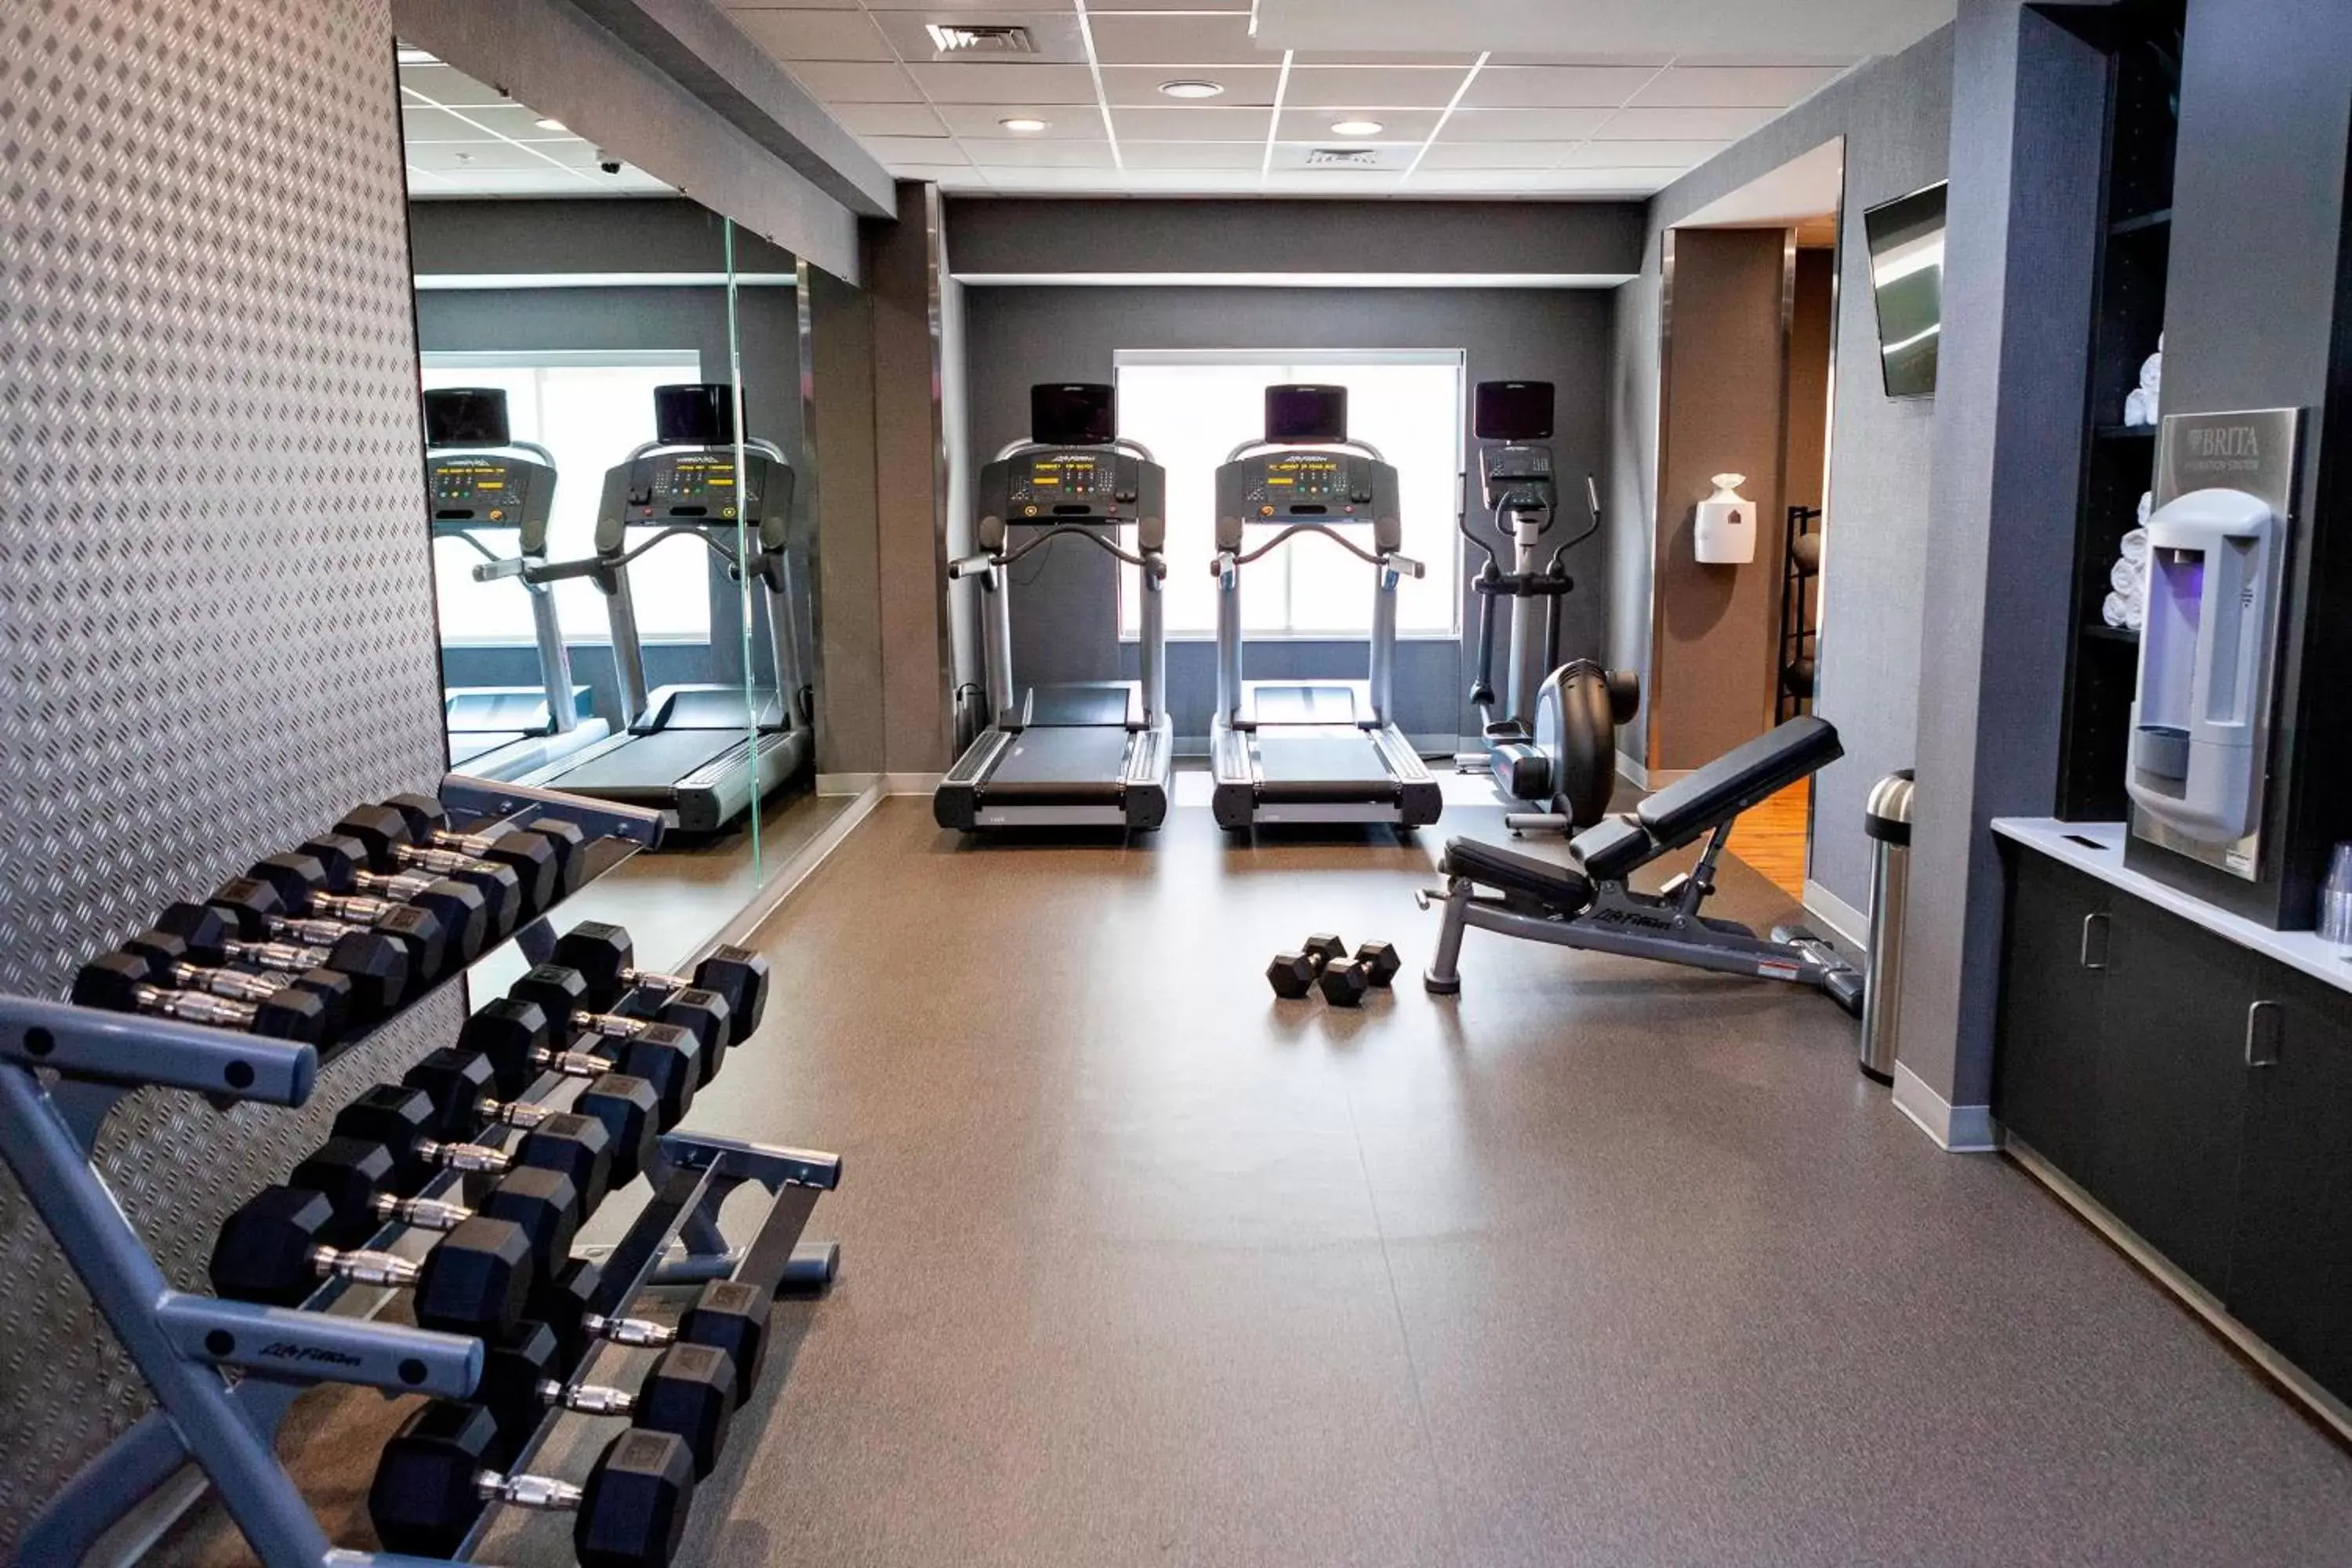 Fitness centre/facilities, Fitness Center/Facilities in Fairfield Inn by Marriott Rockingham